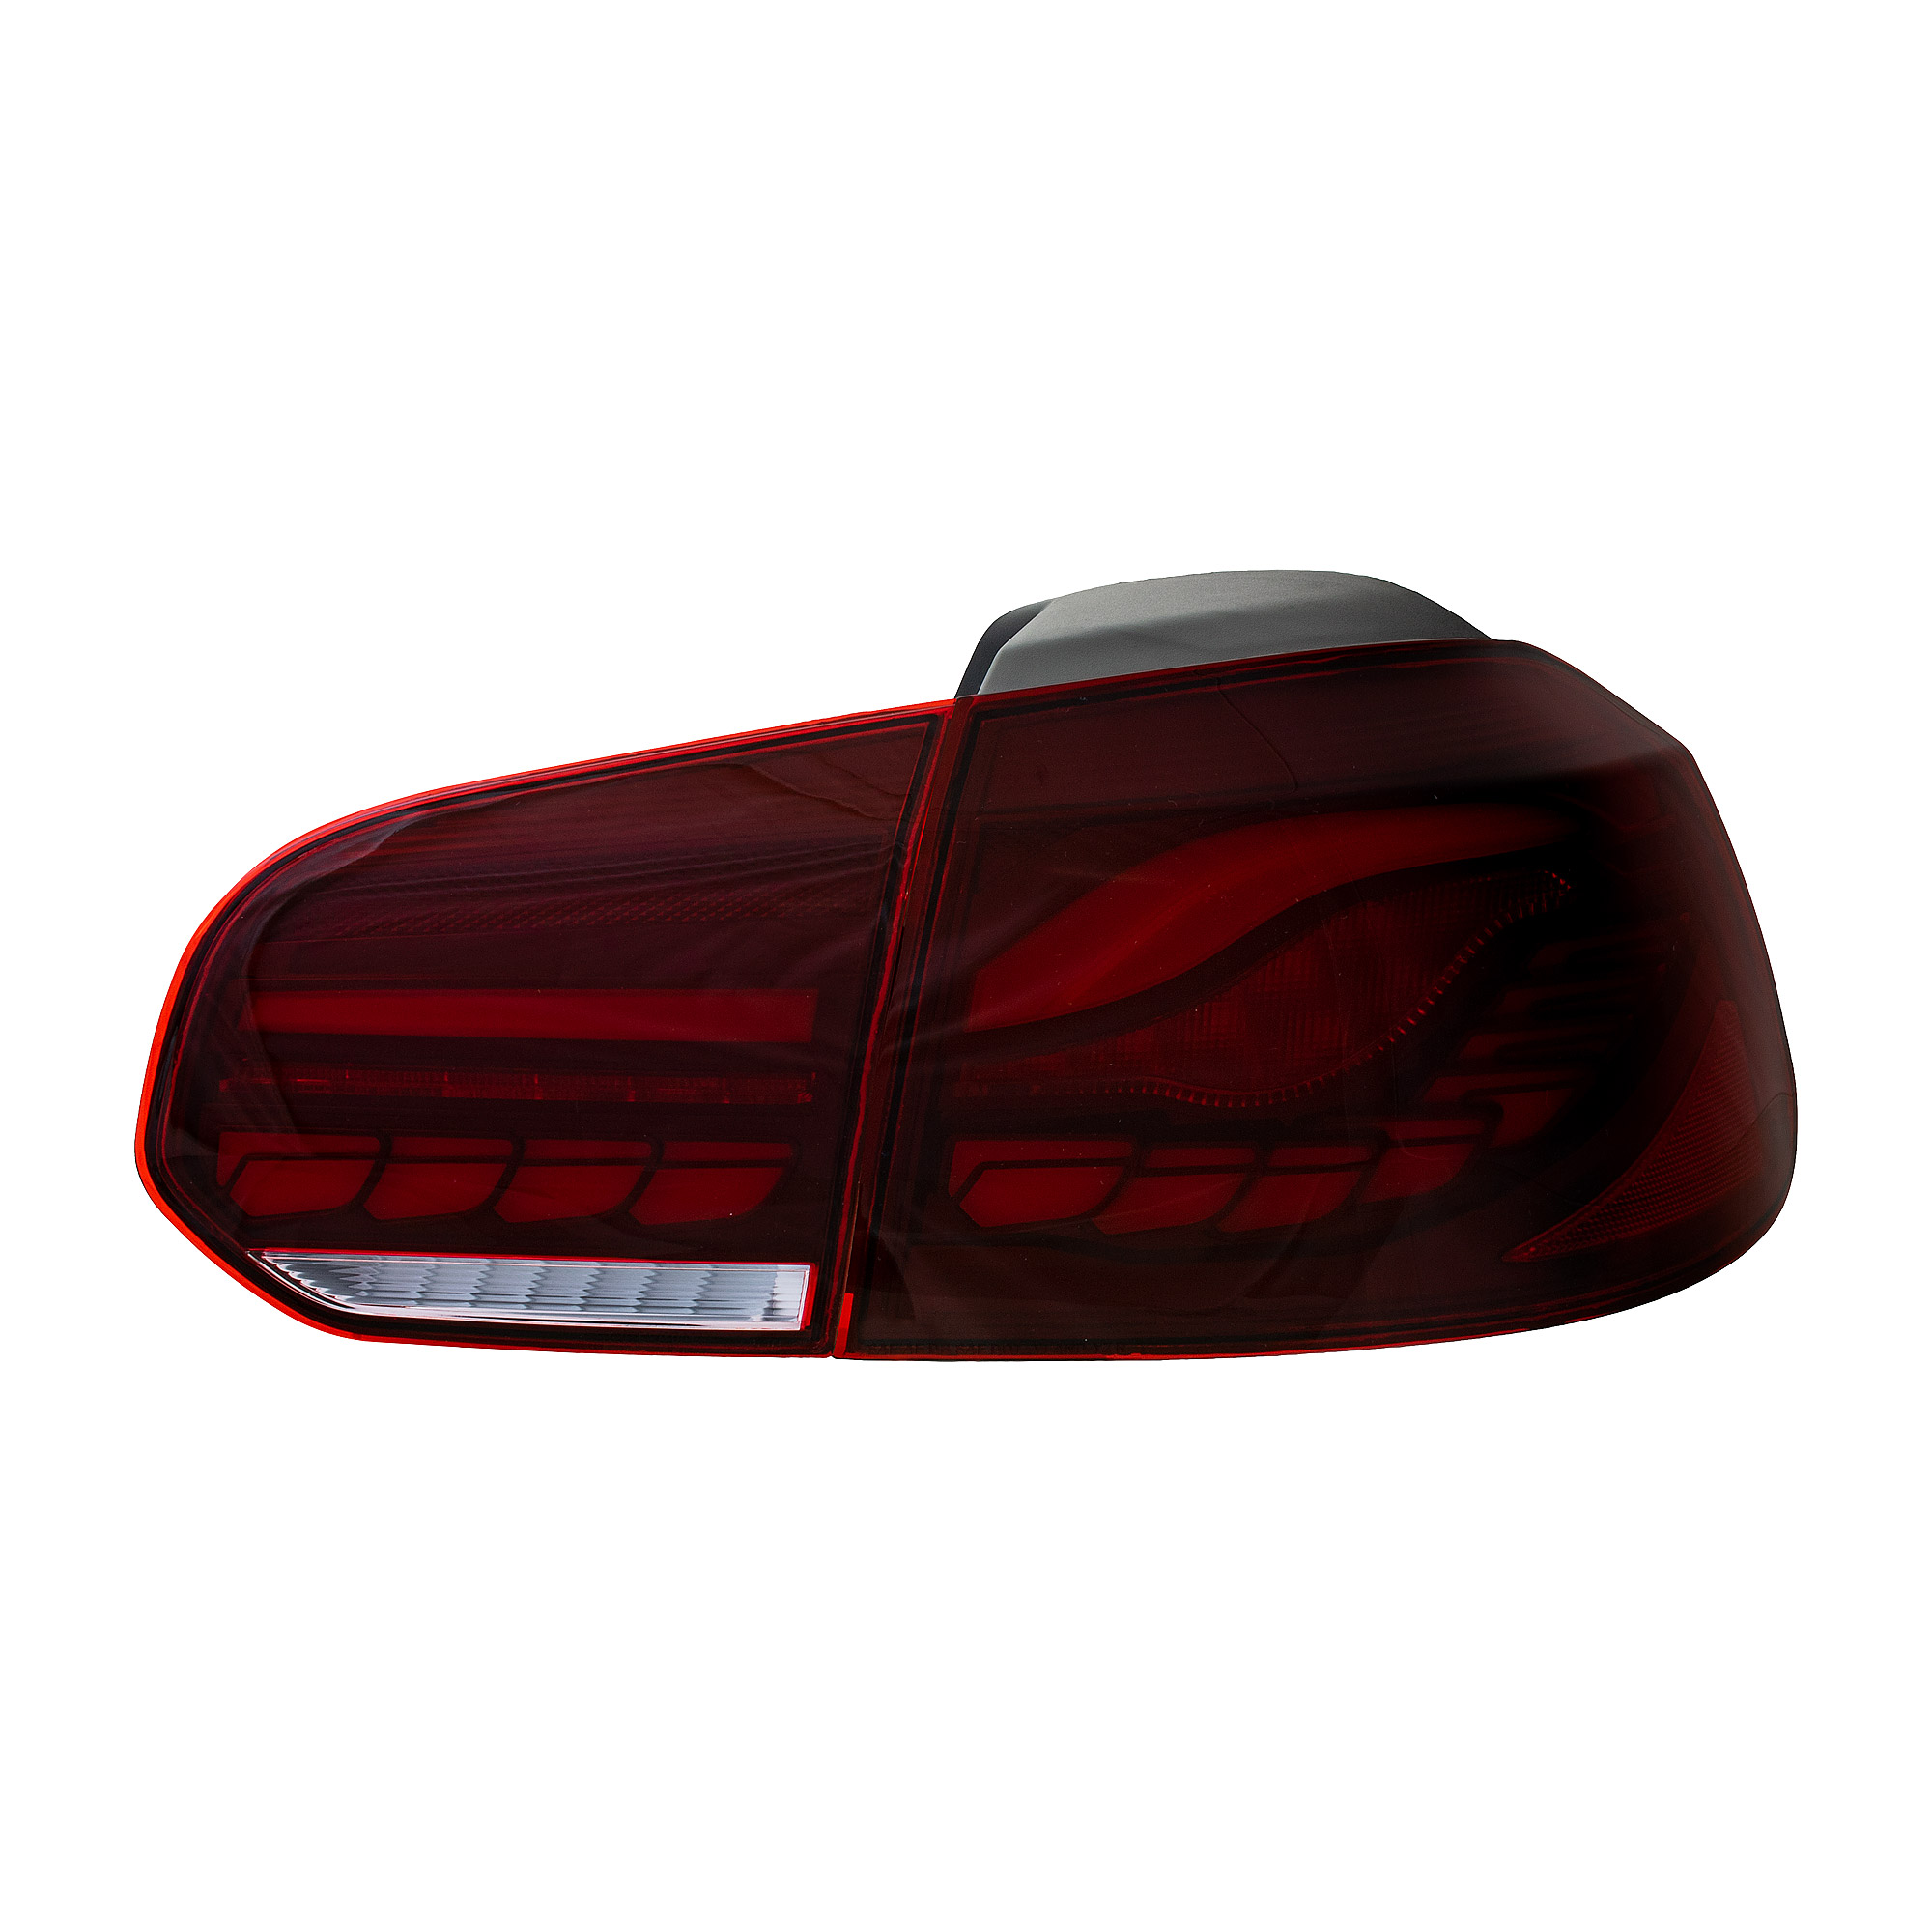 OLED Rückleuchten dynamisch Blinker für VW Golf 6 Bj. 08-13 Klarglas rot chrom